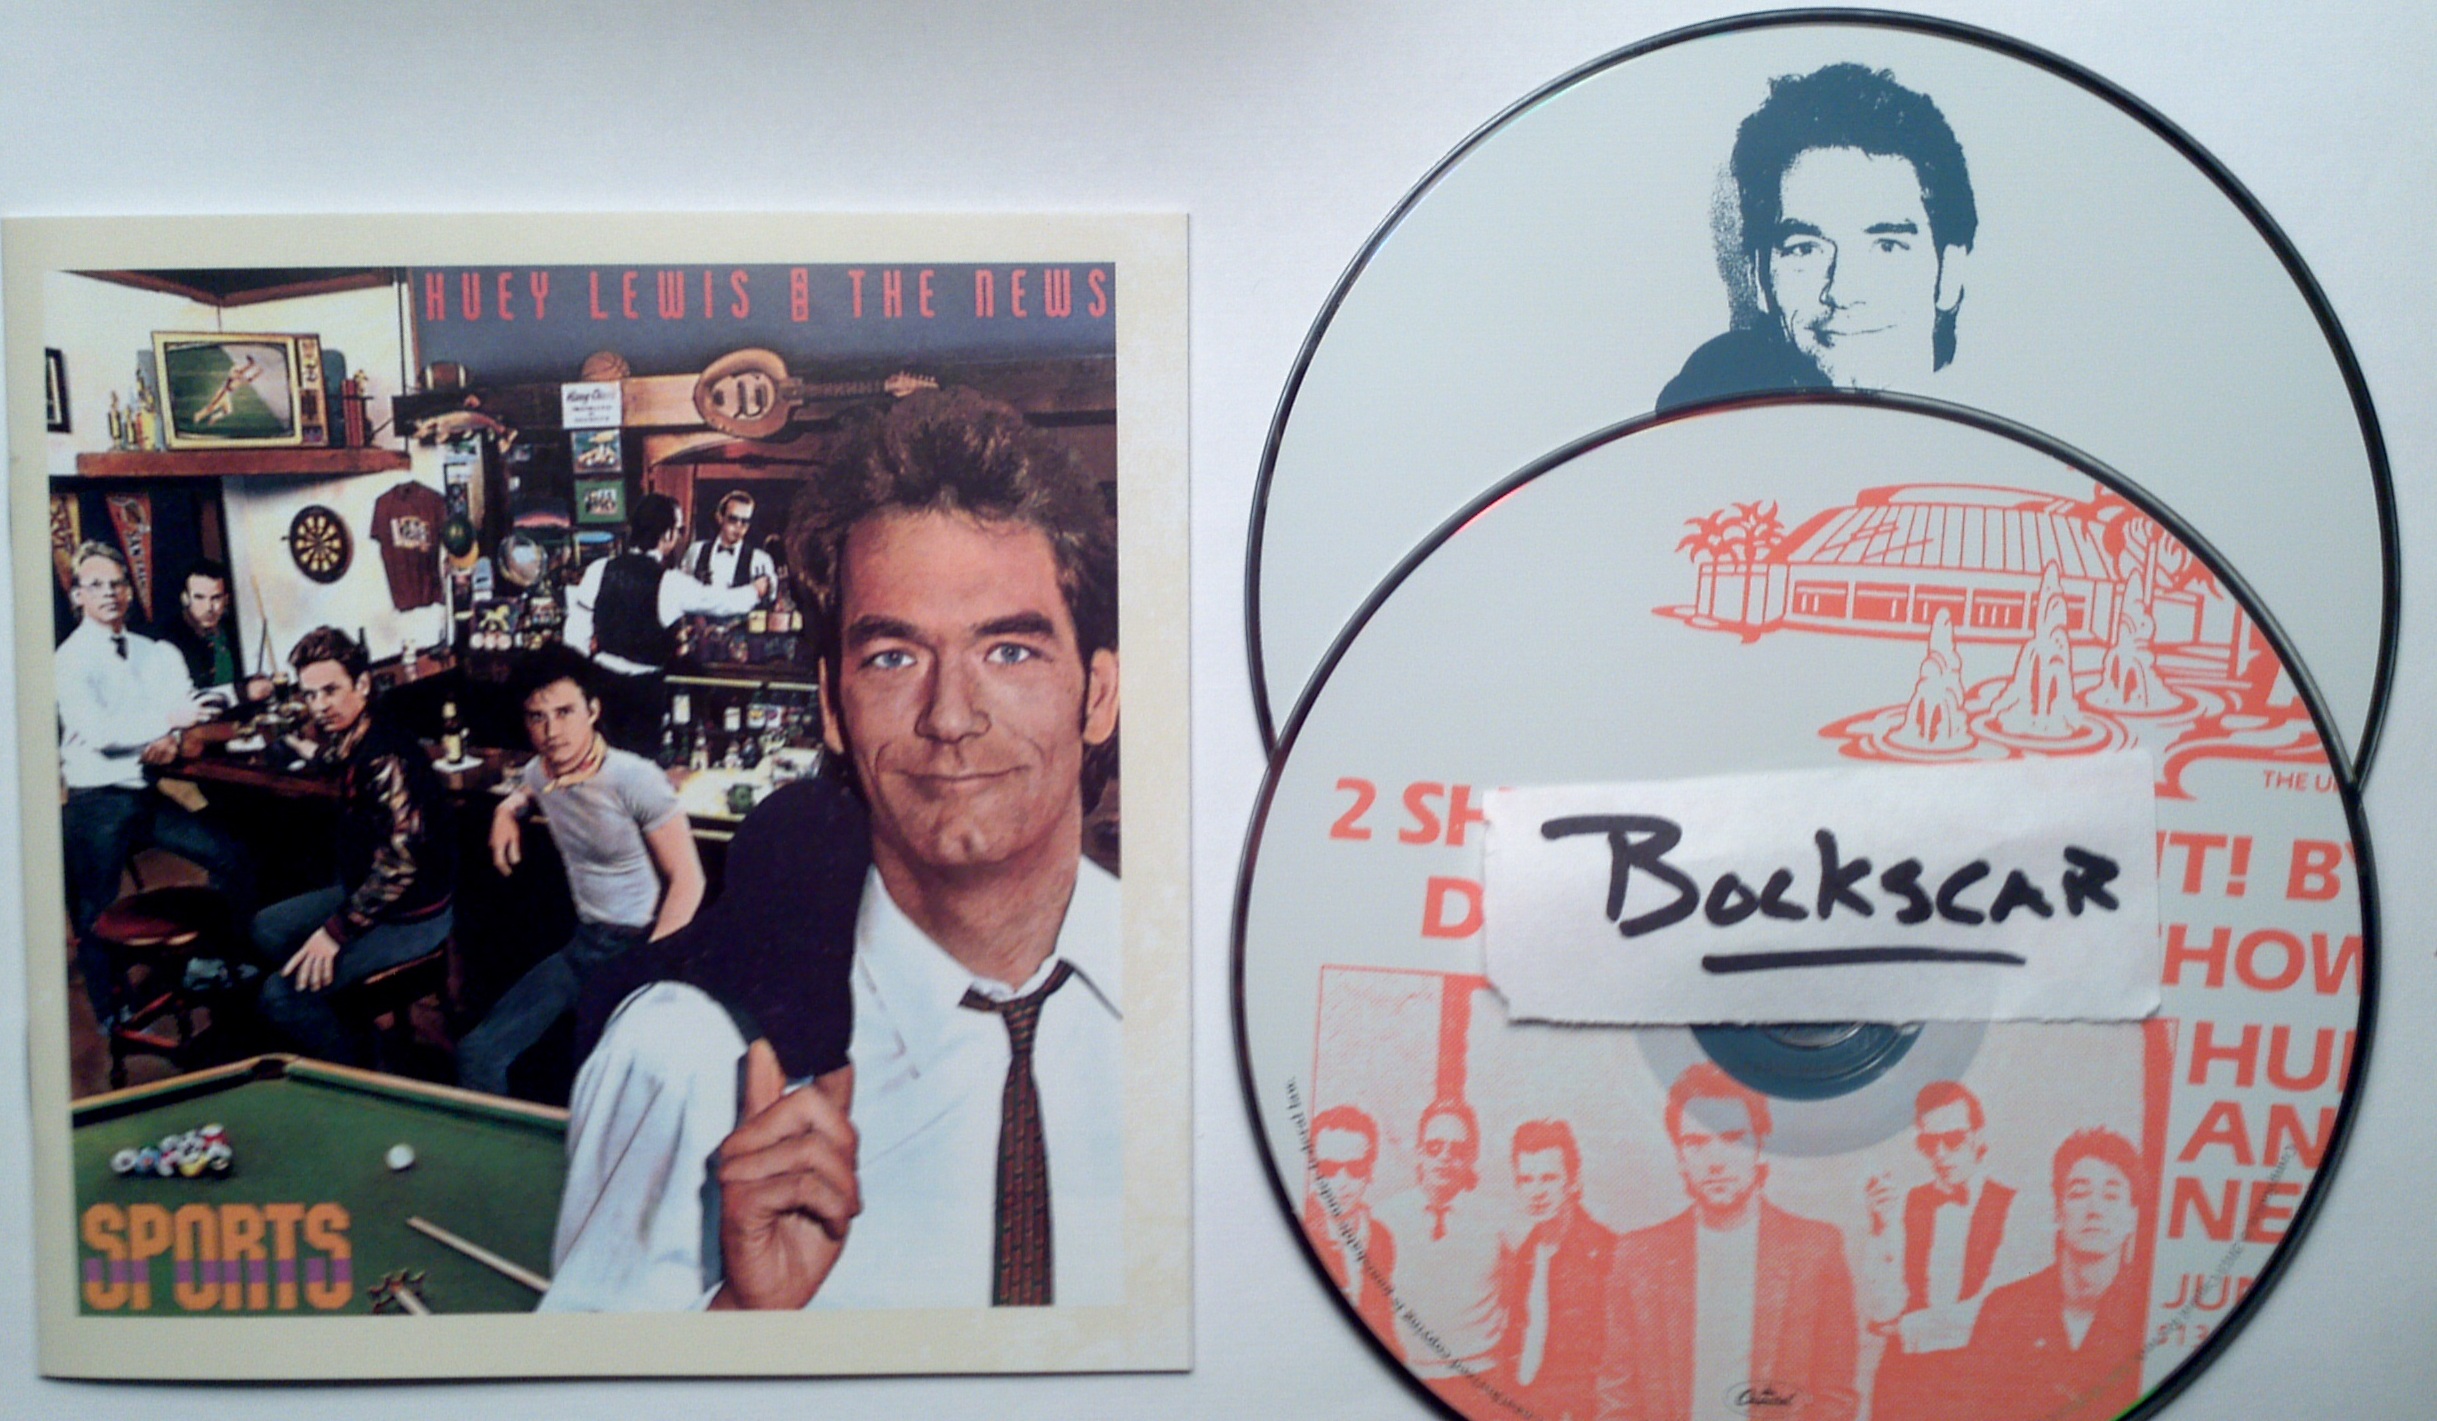 Huey Lewis And The News-Sports 30th Anniversary Edition-Remastered-2CD-FLAC-2013-BOCKSCAR